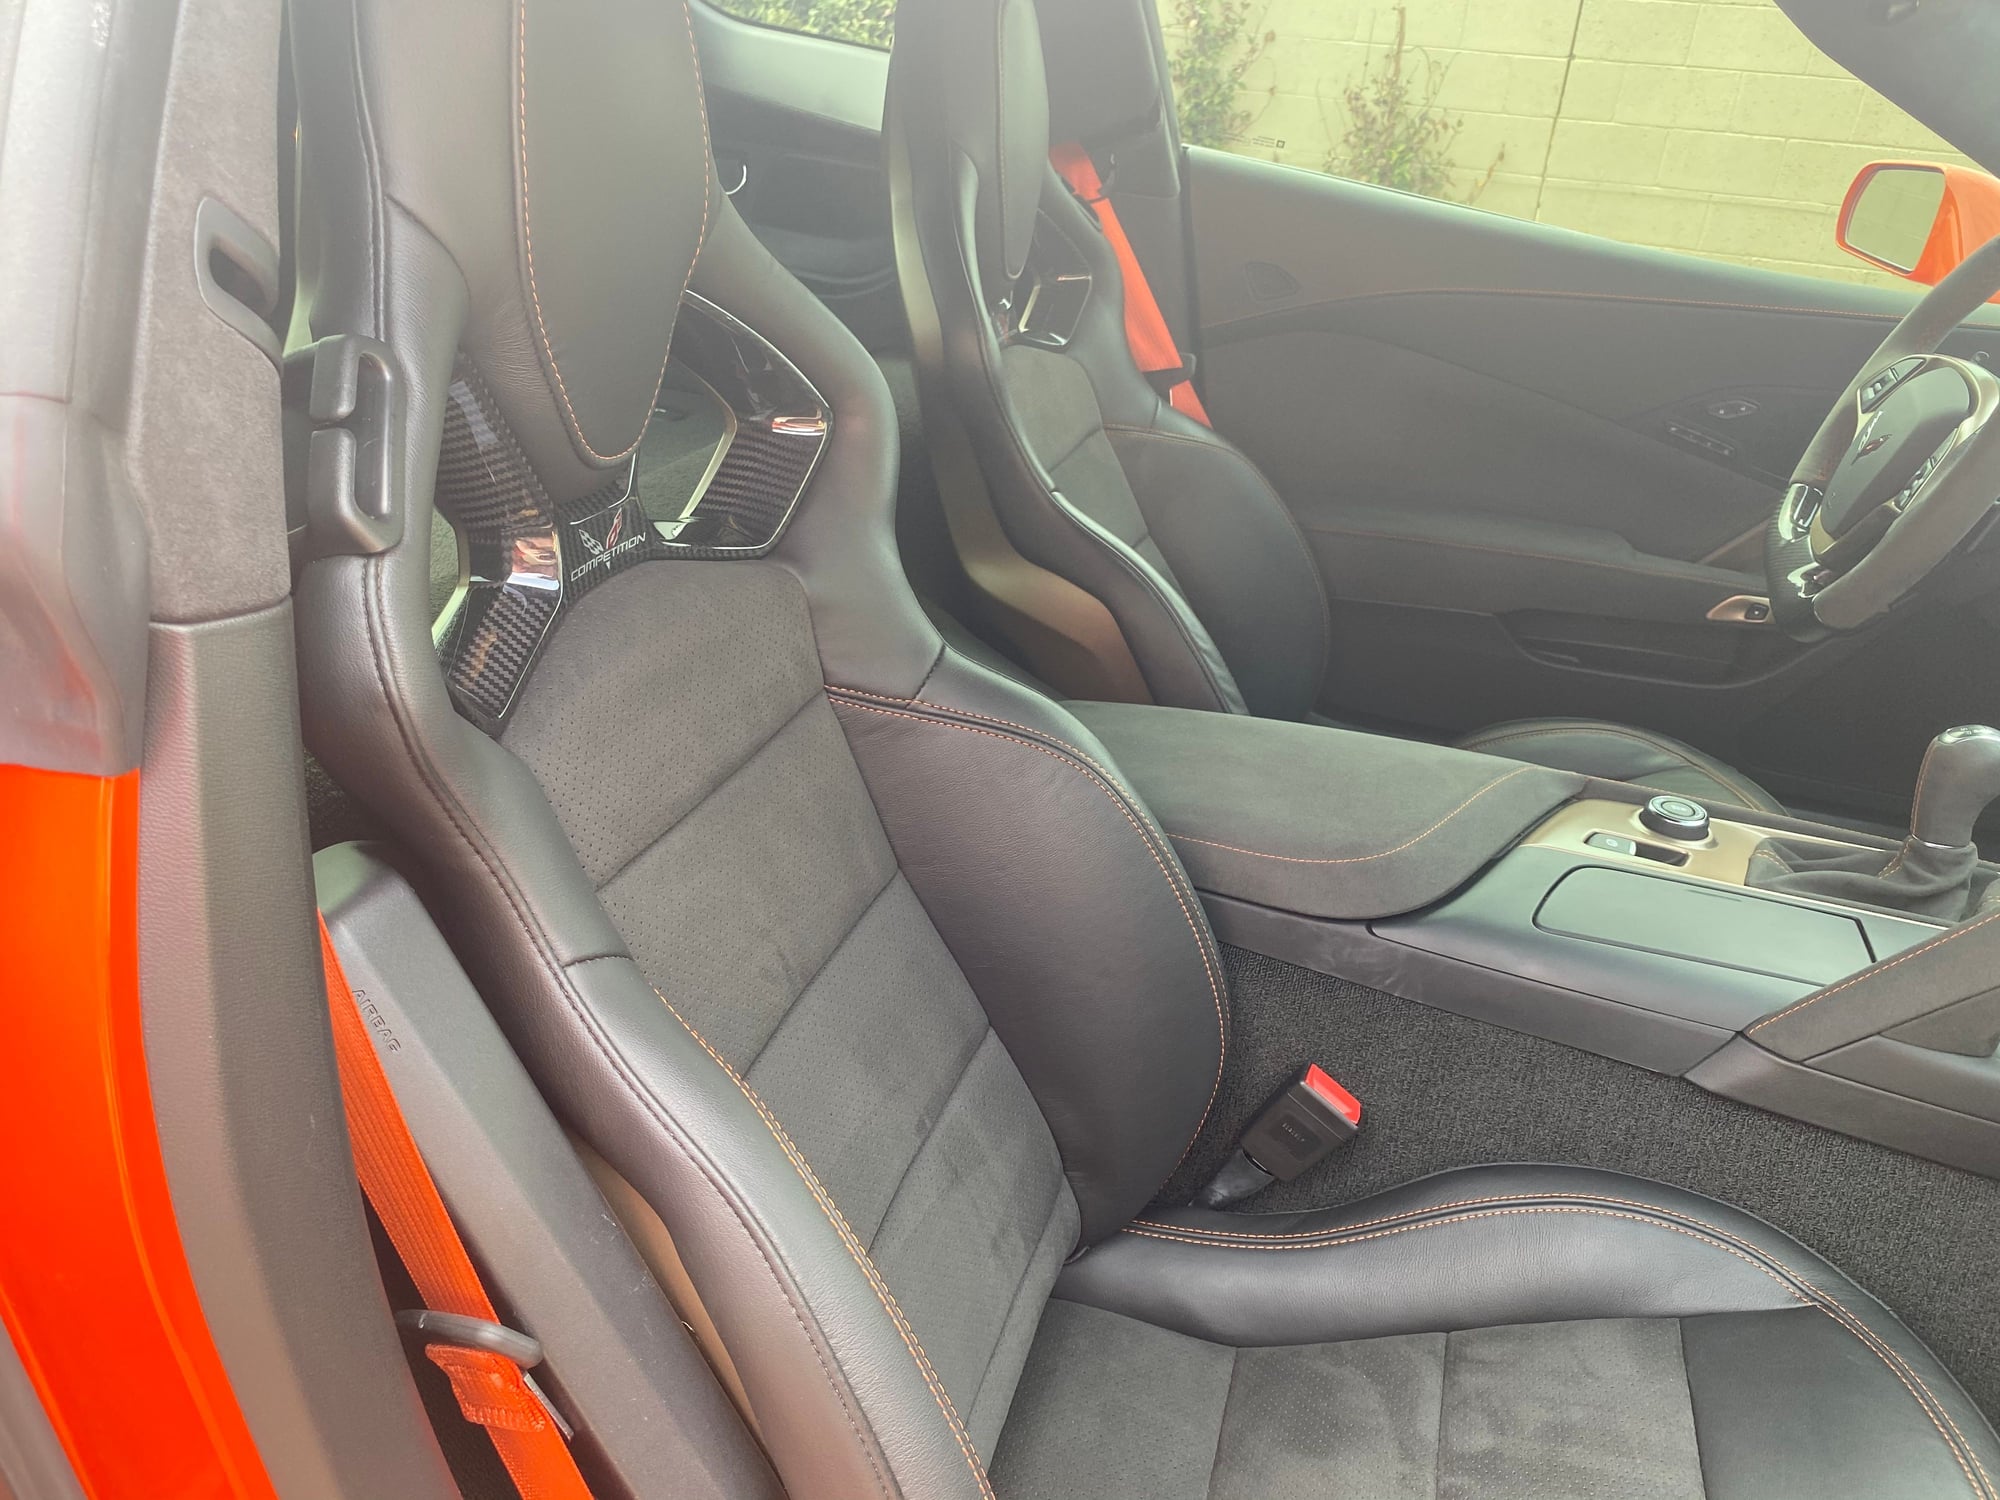 2019 Chevrolet Corvette - 2019 Corvette ZR1 Sebring Orange Manual - Used - VIN 1G1Y42D98K5800555 - 3,100 Miles - 8 cyl - 2WD - Manual - Coupe - Orange - Gilbert, AZ 85297, United States